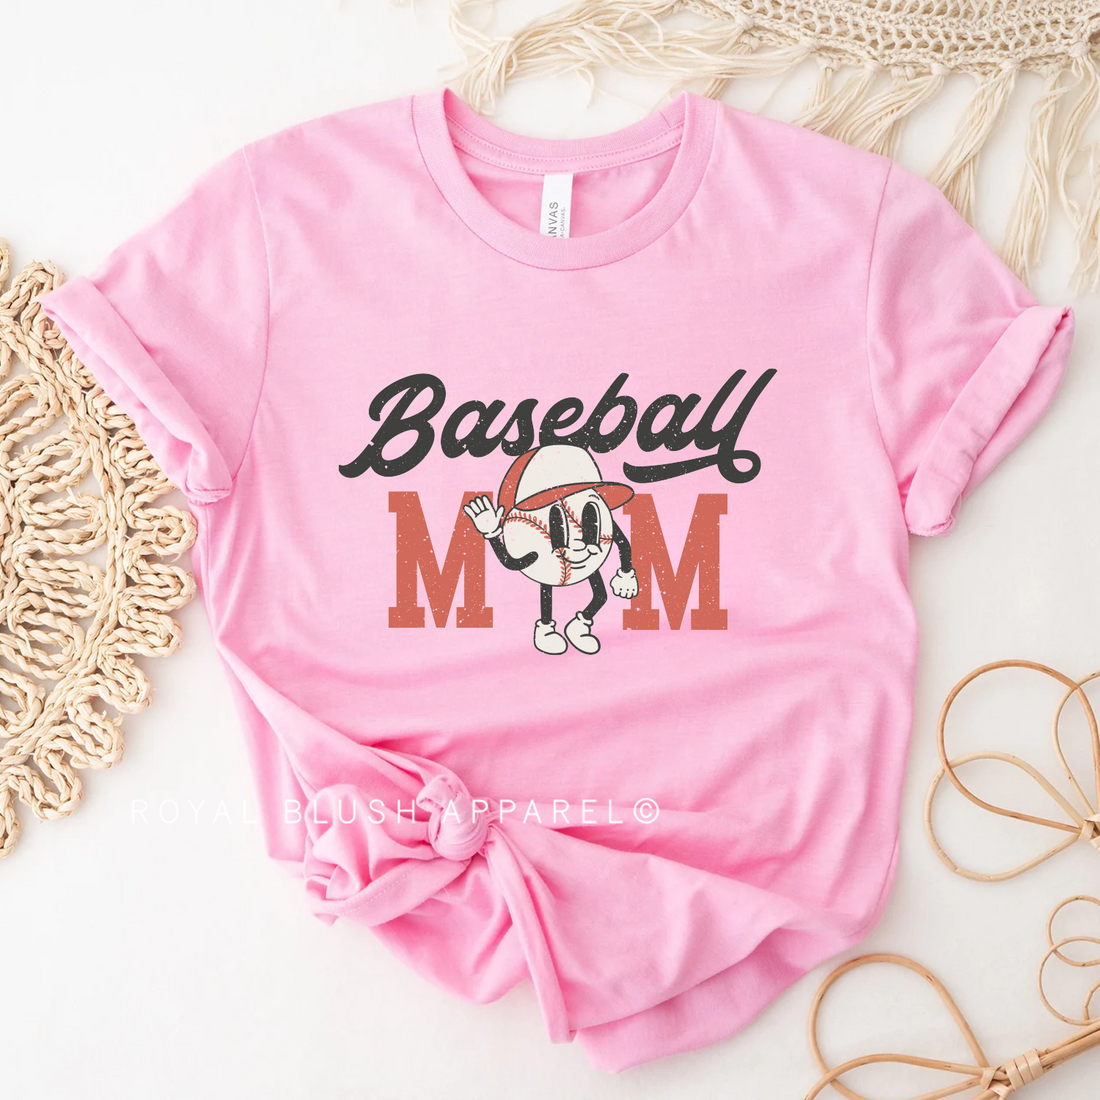 Baseball Mom Relaxed Unisex T-shirt - SMALL BUBBLE GUM